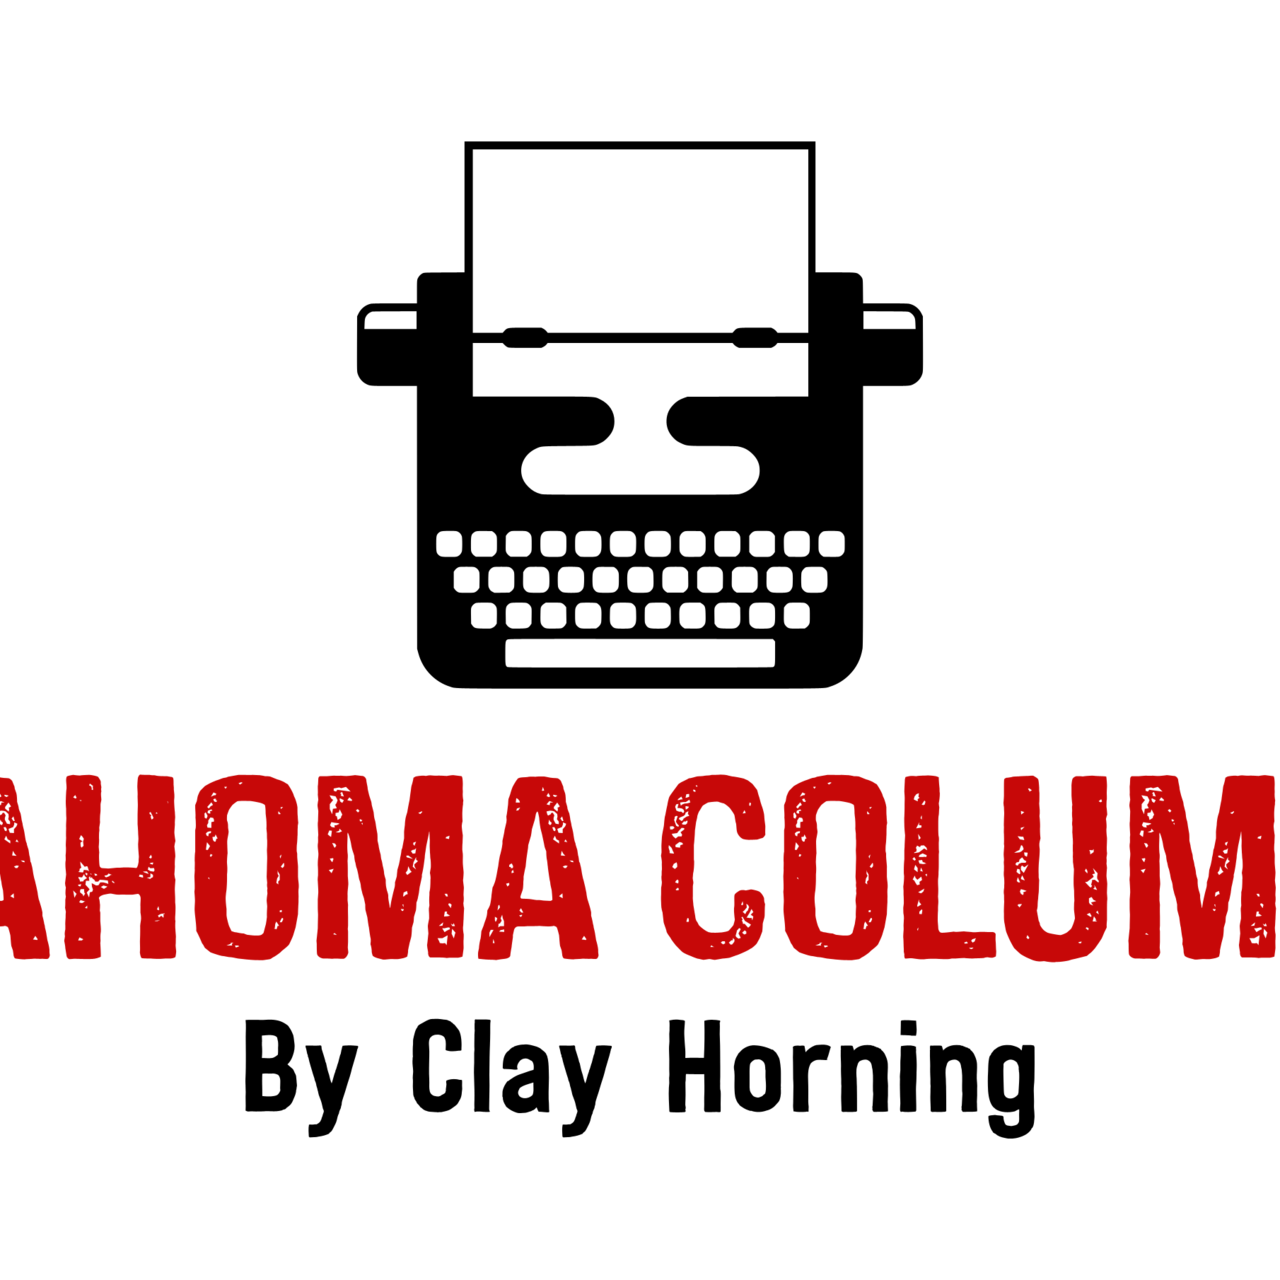 Oklahoma Columnist, by Clay Horning